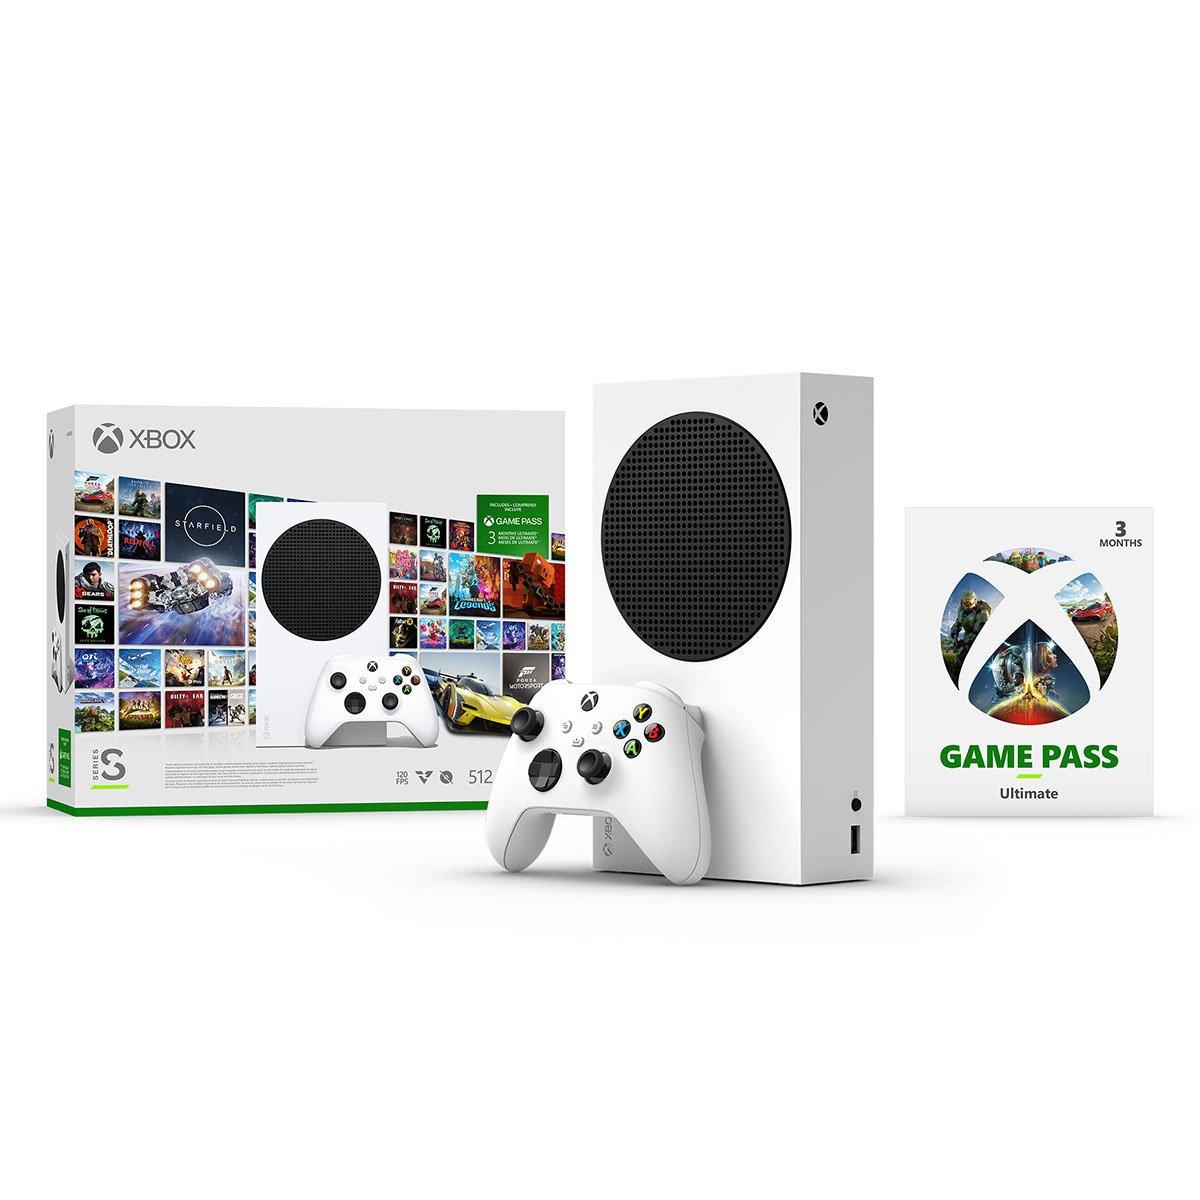 Microsoft Xbox Series S -VS- Xbox One S - Loading times - FORTNITE